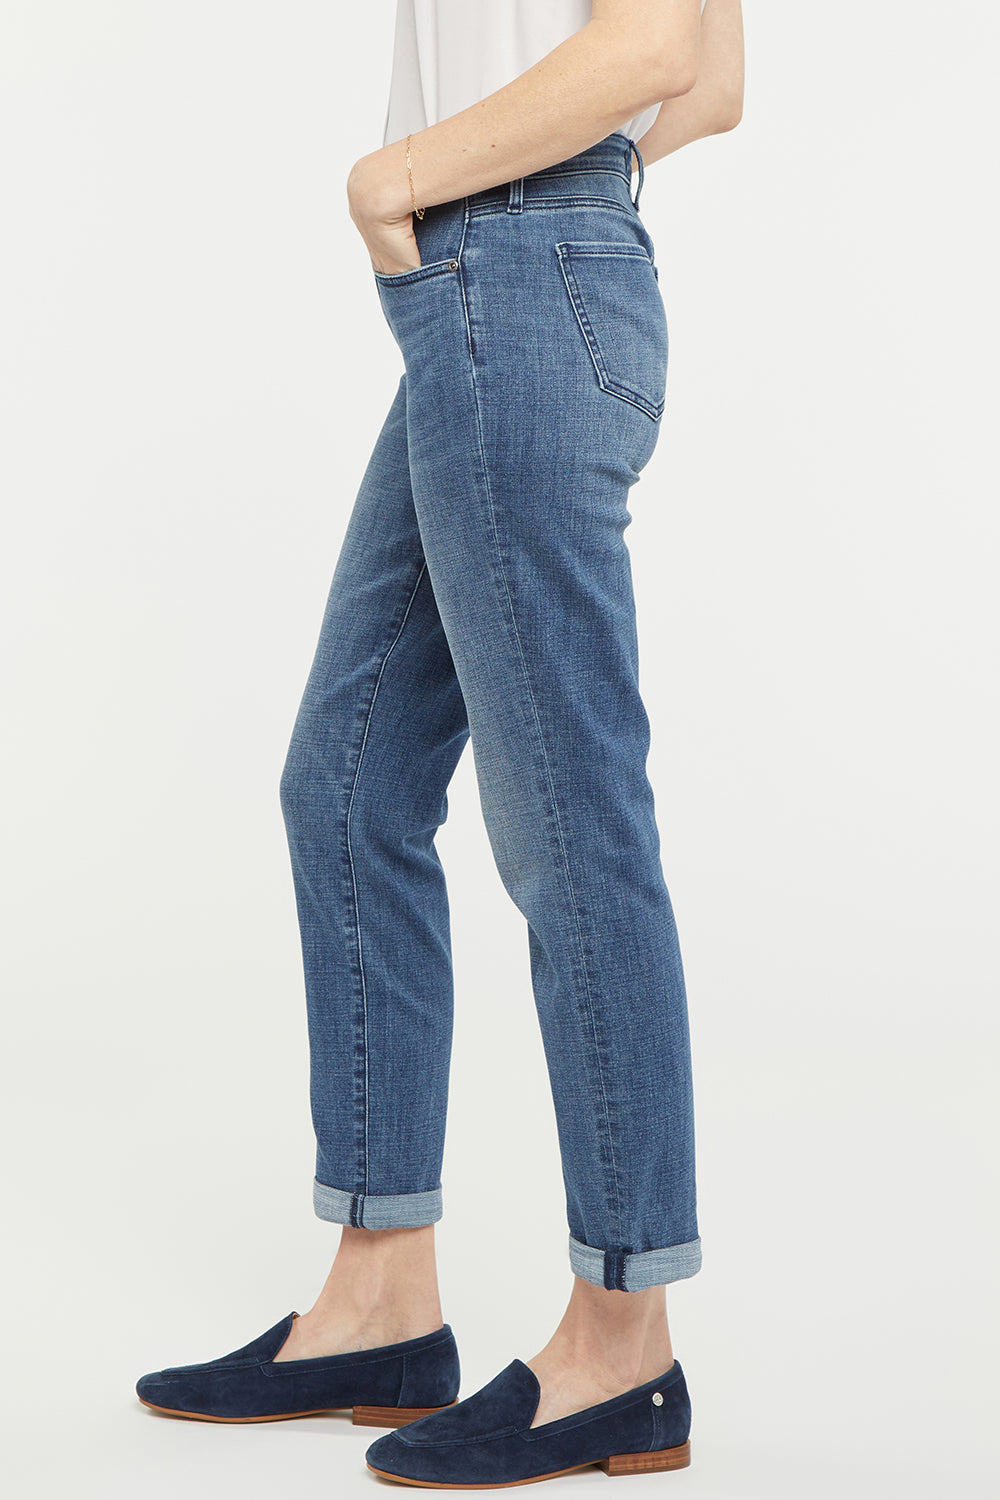 NYDJ Margot Girlfriend Jeans With Roll Cuffs - Caliente